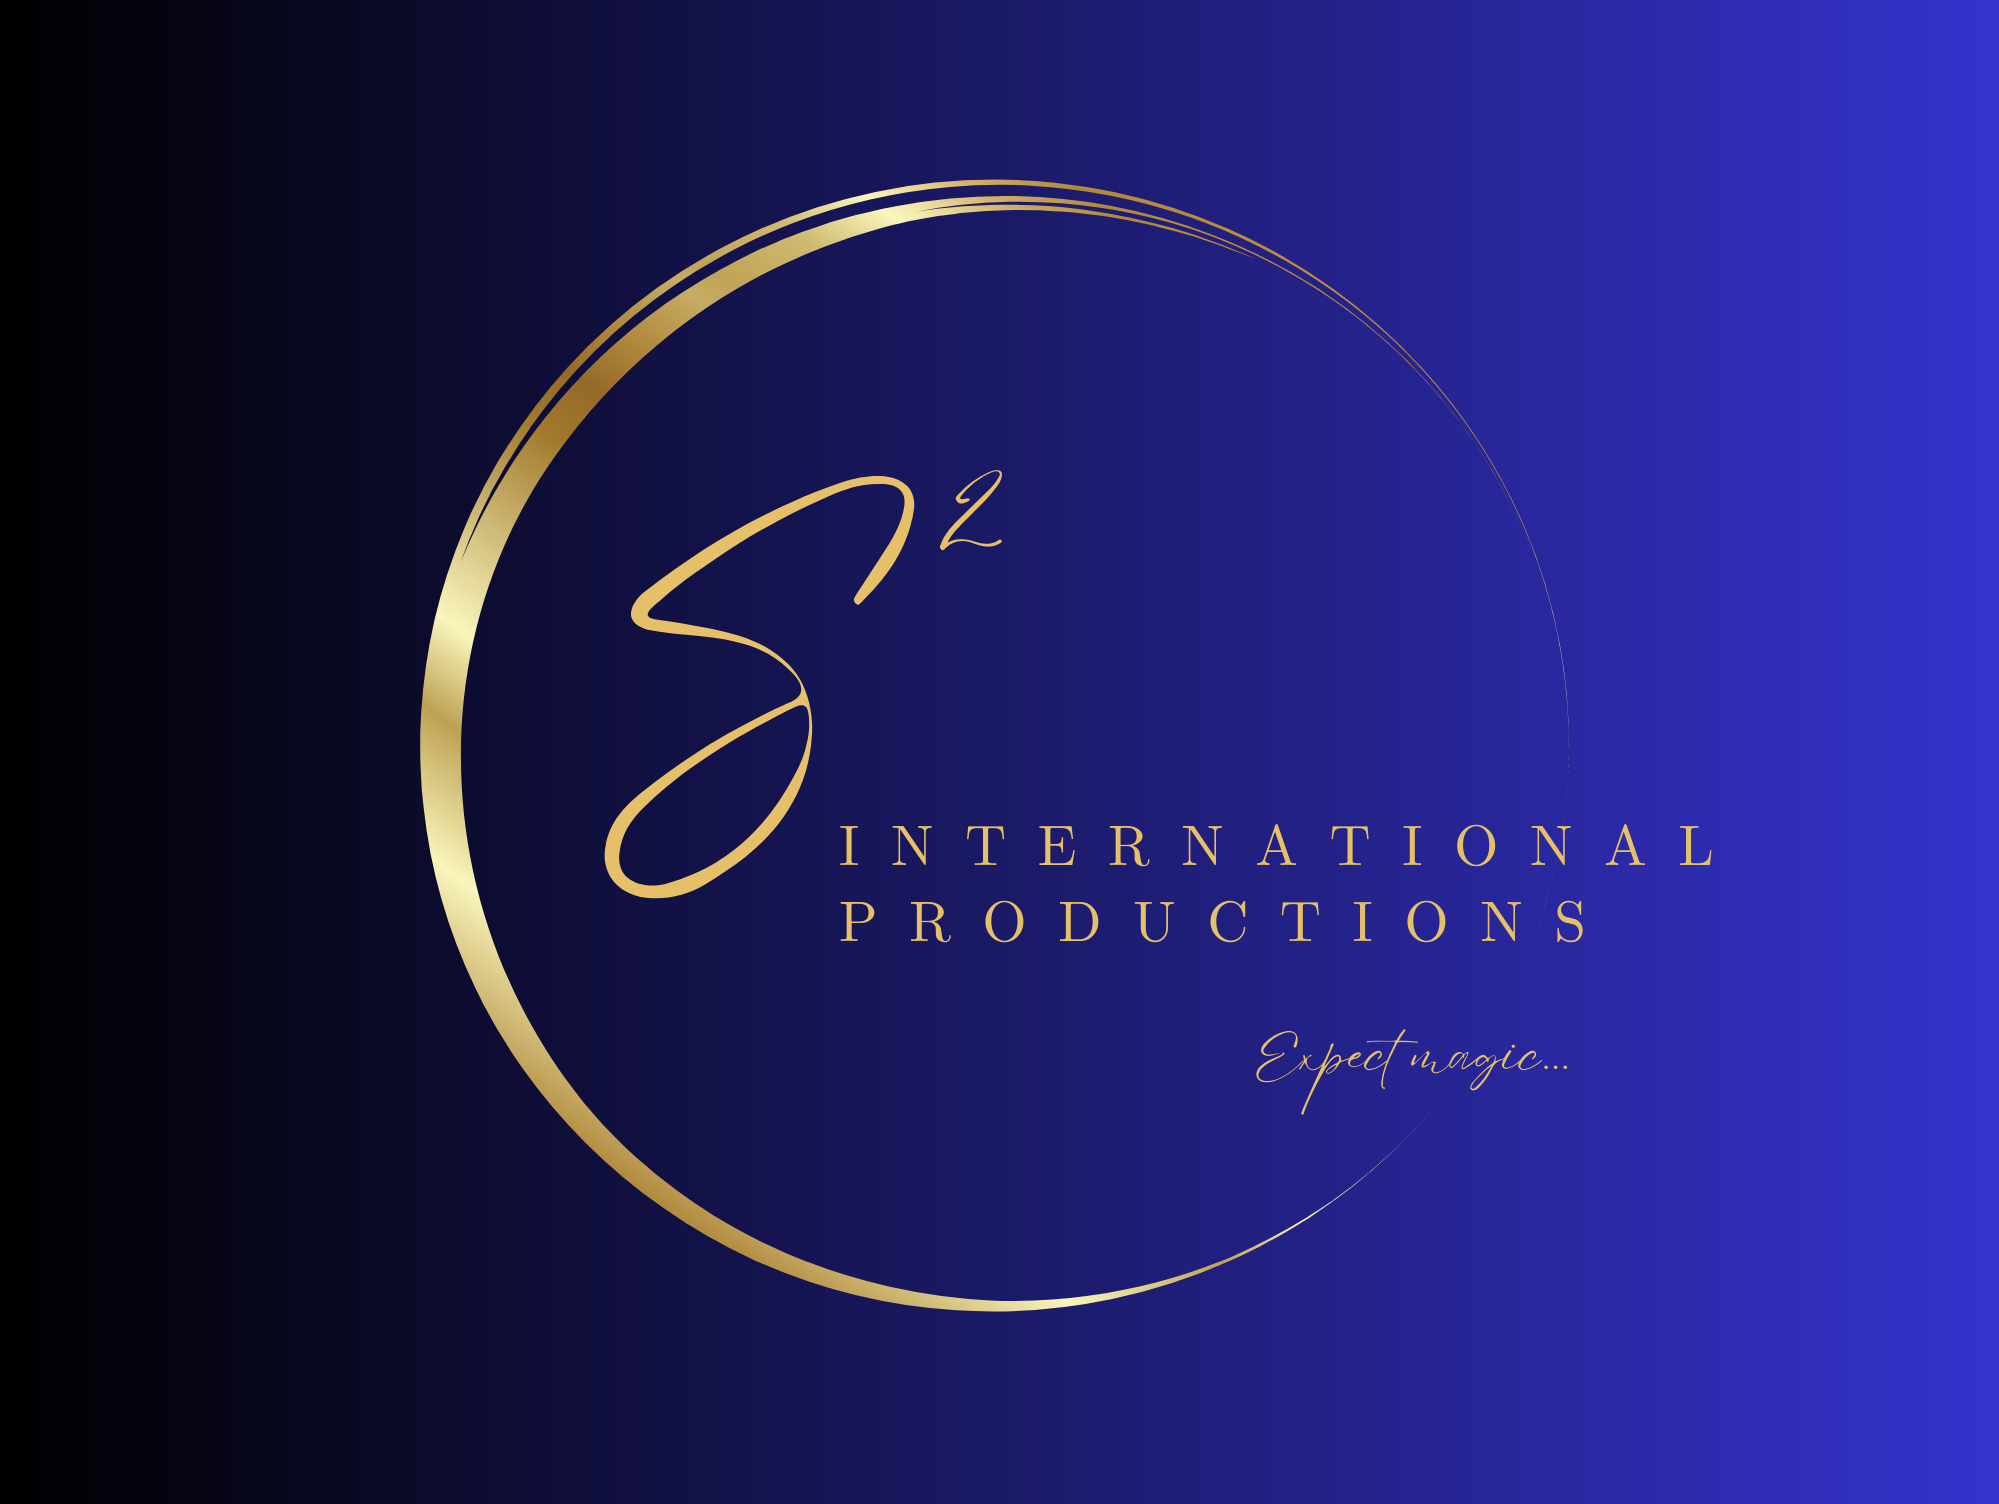 S² International Productions